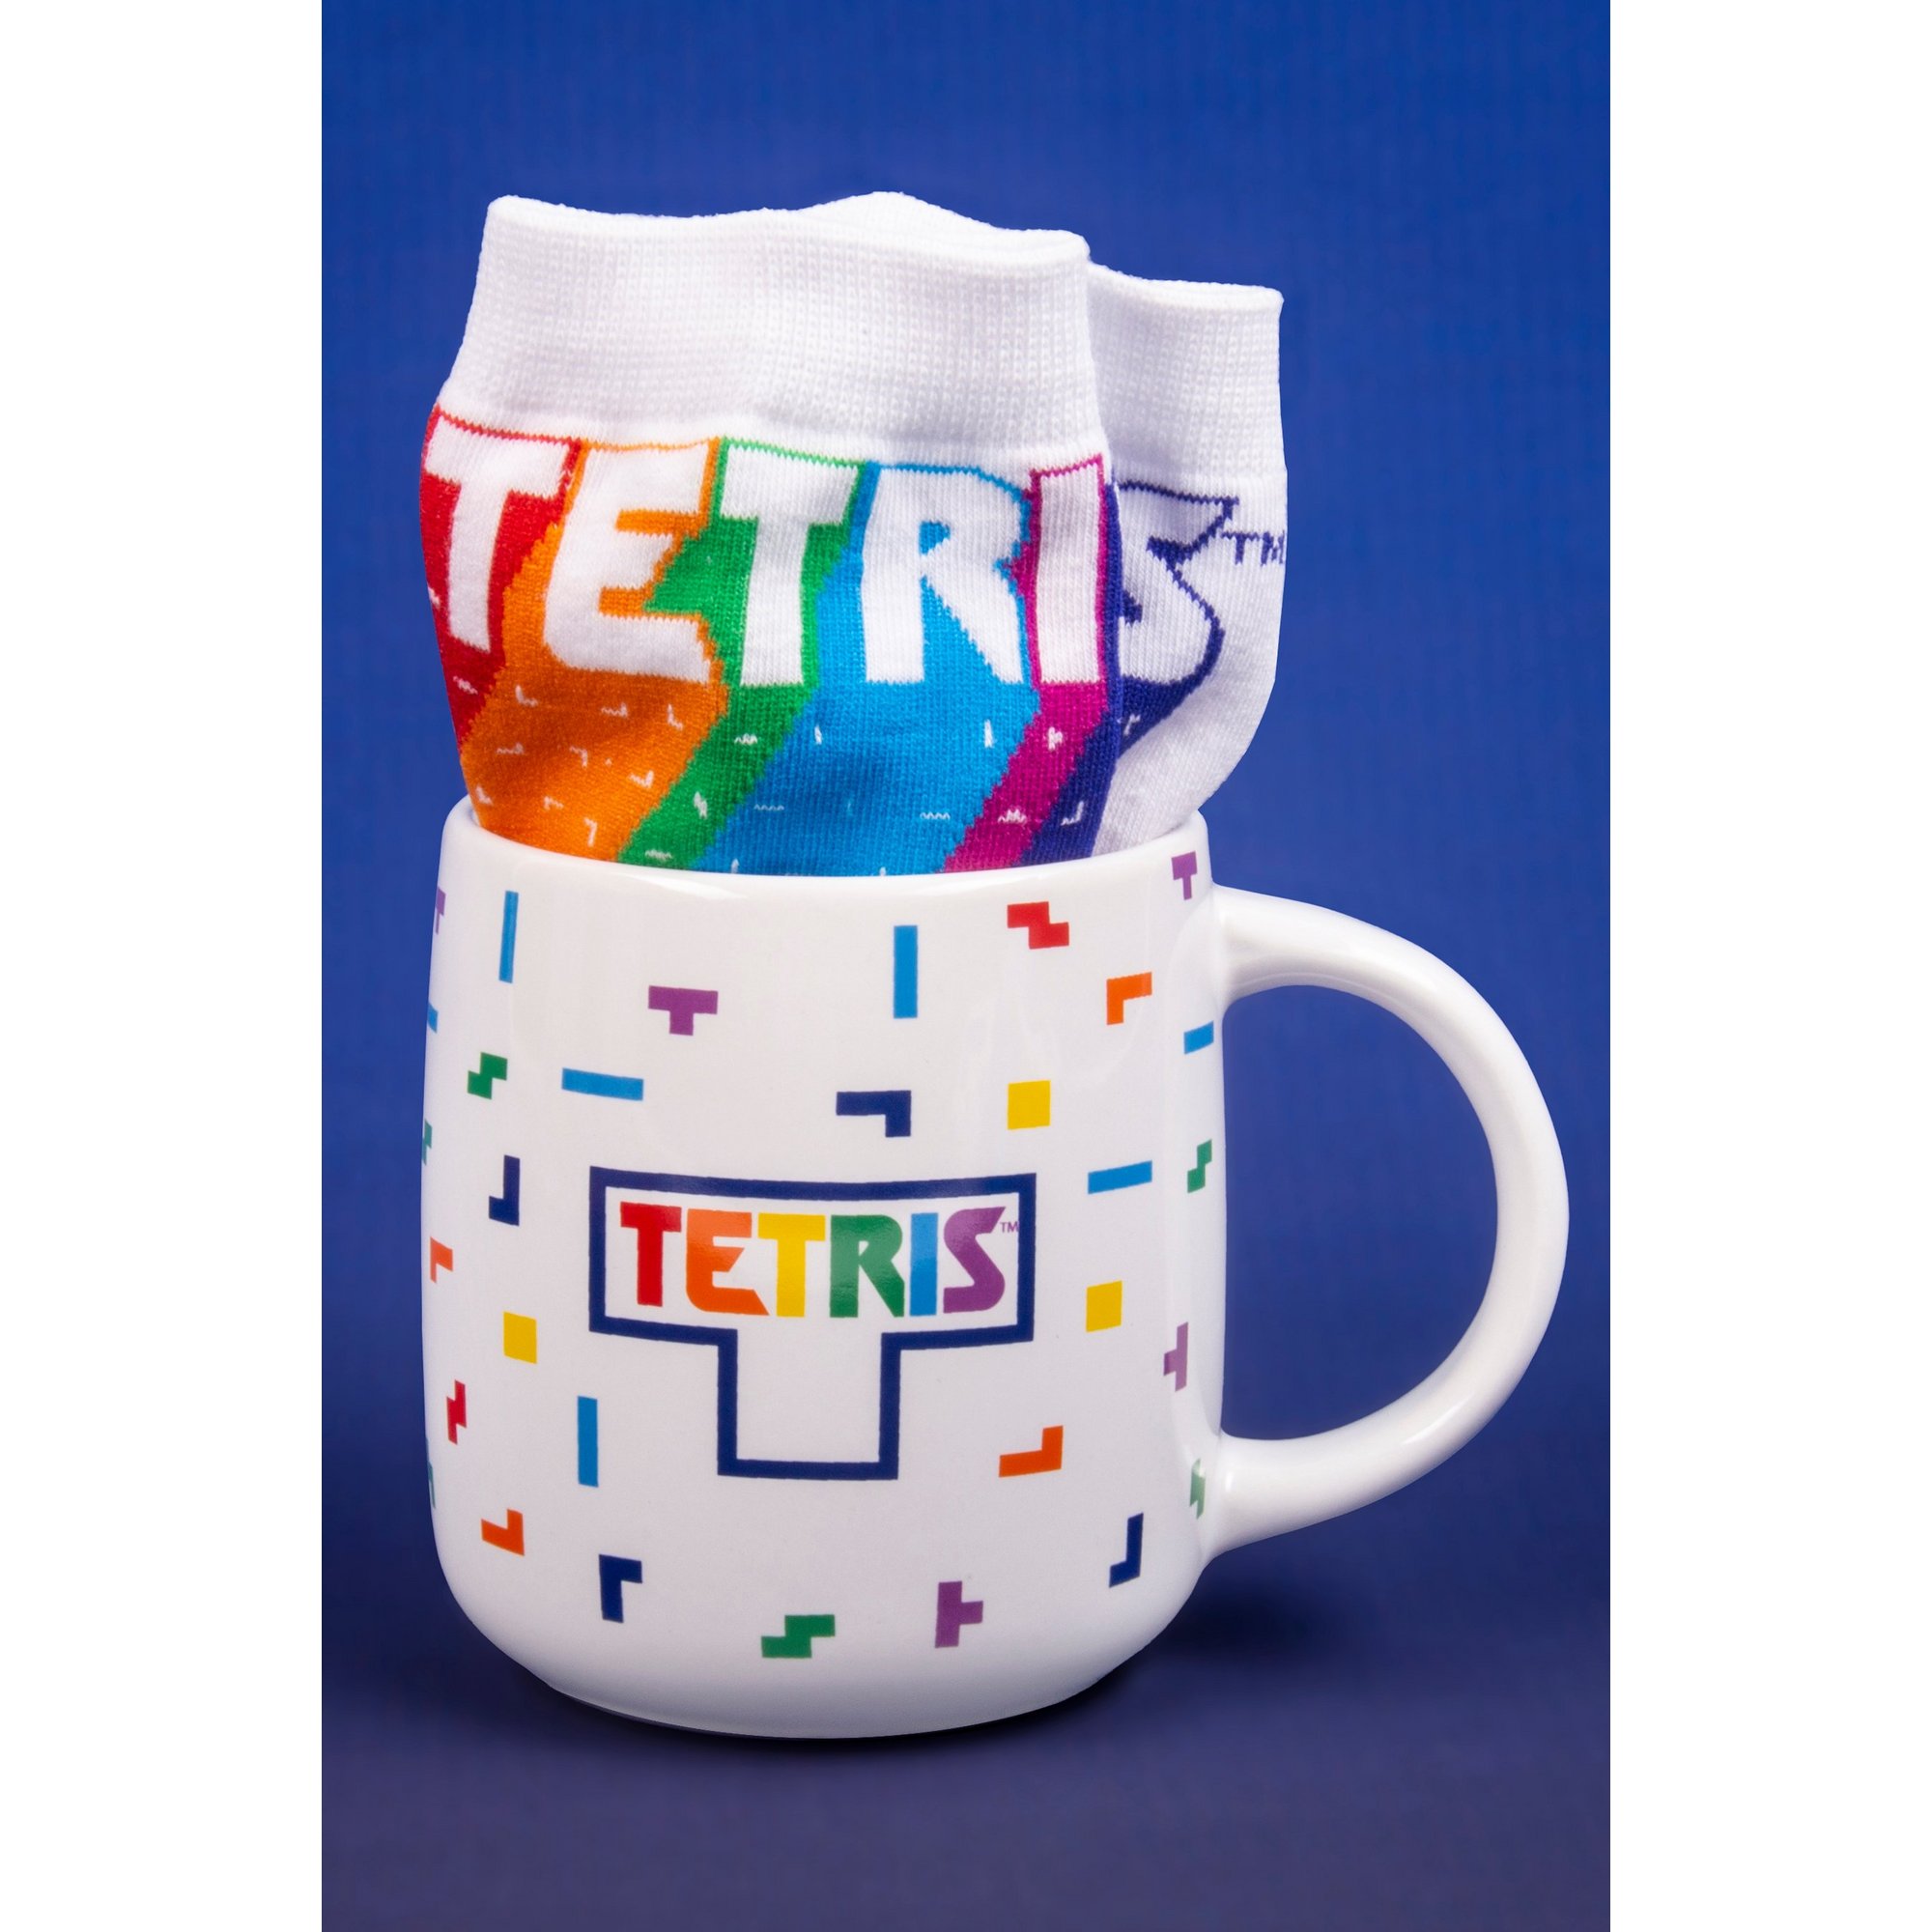 Tetris Mug and Socks Set